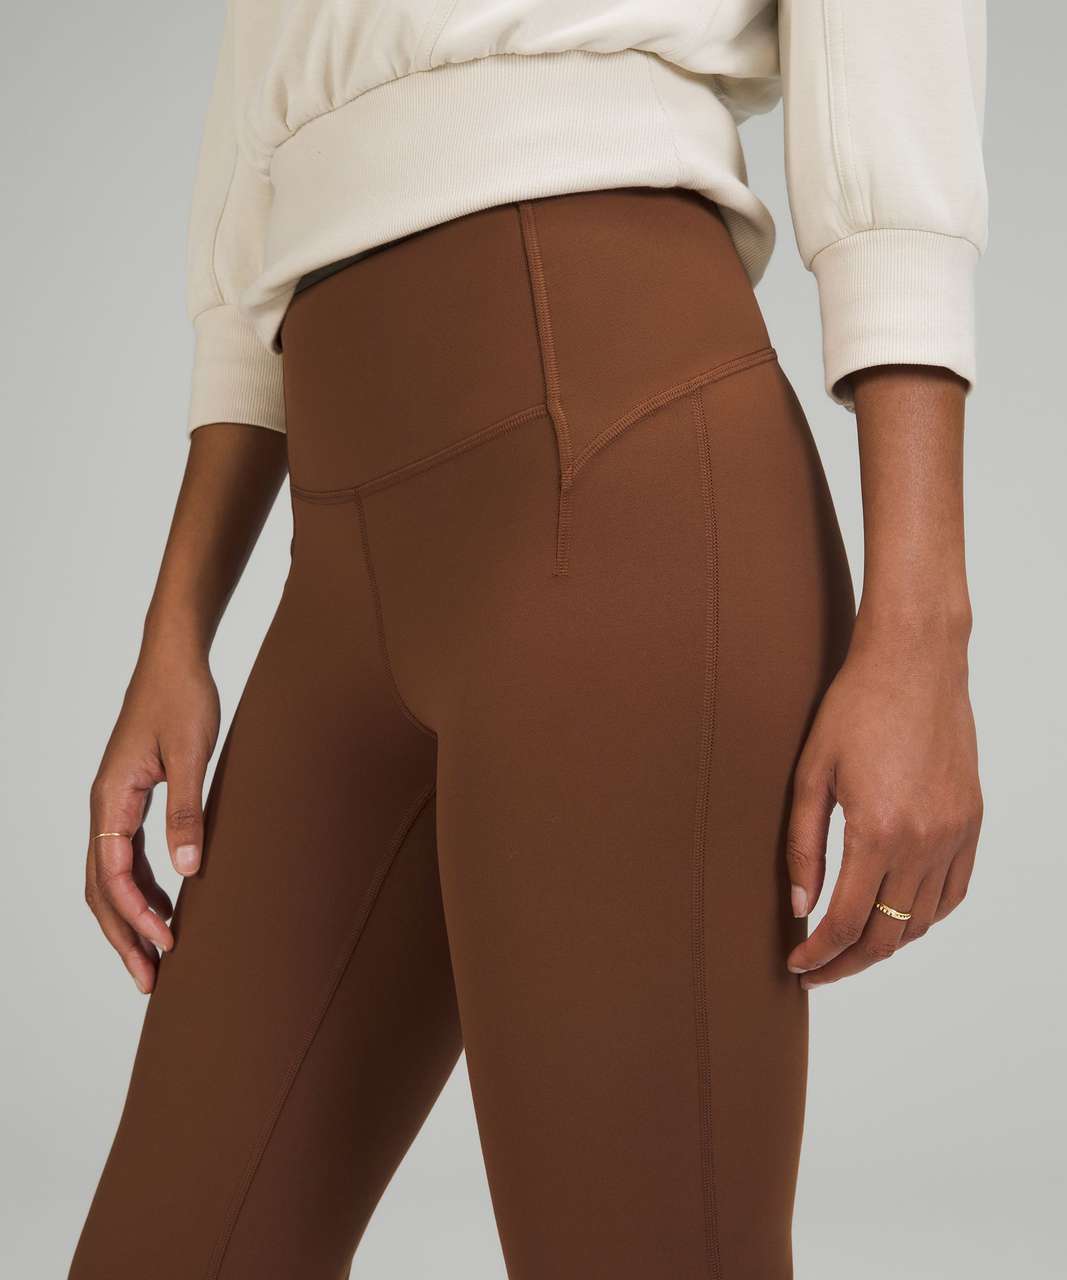 32.5” inseam SHR Butternut Brown Groove pants (2) on 5'2